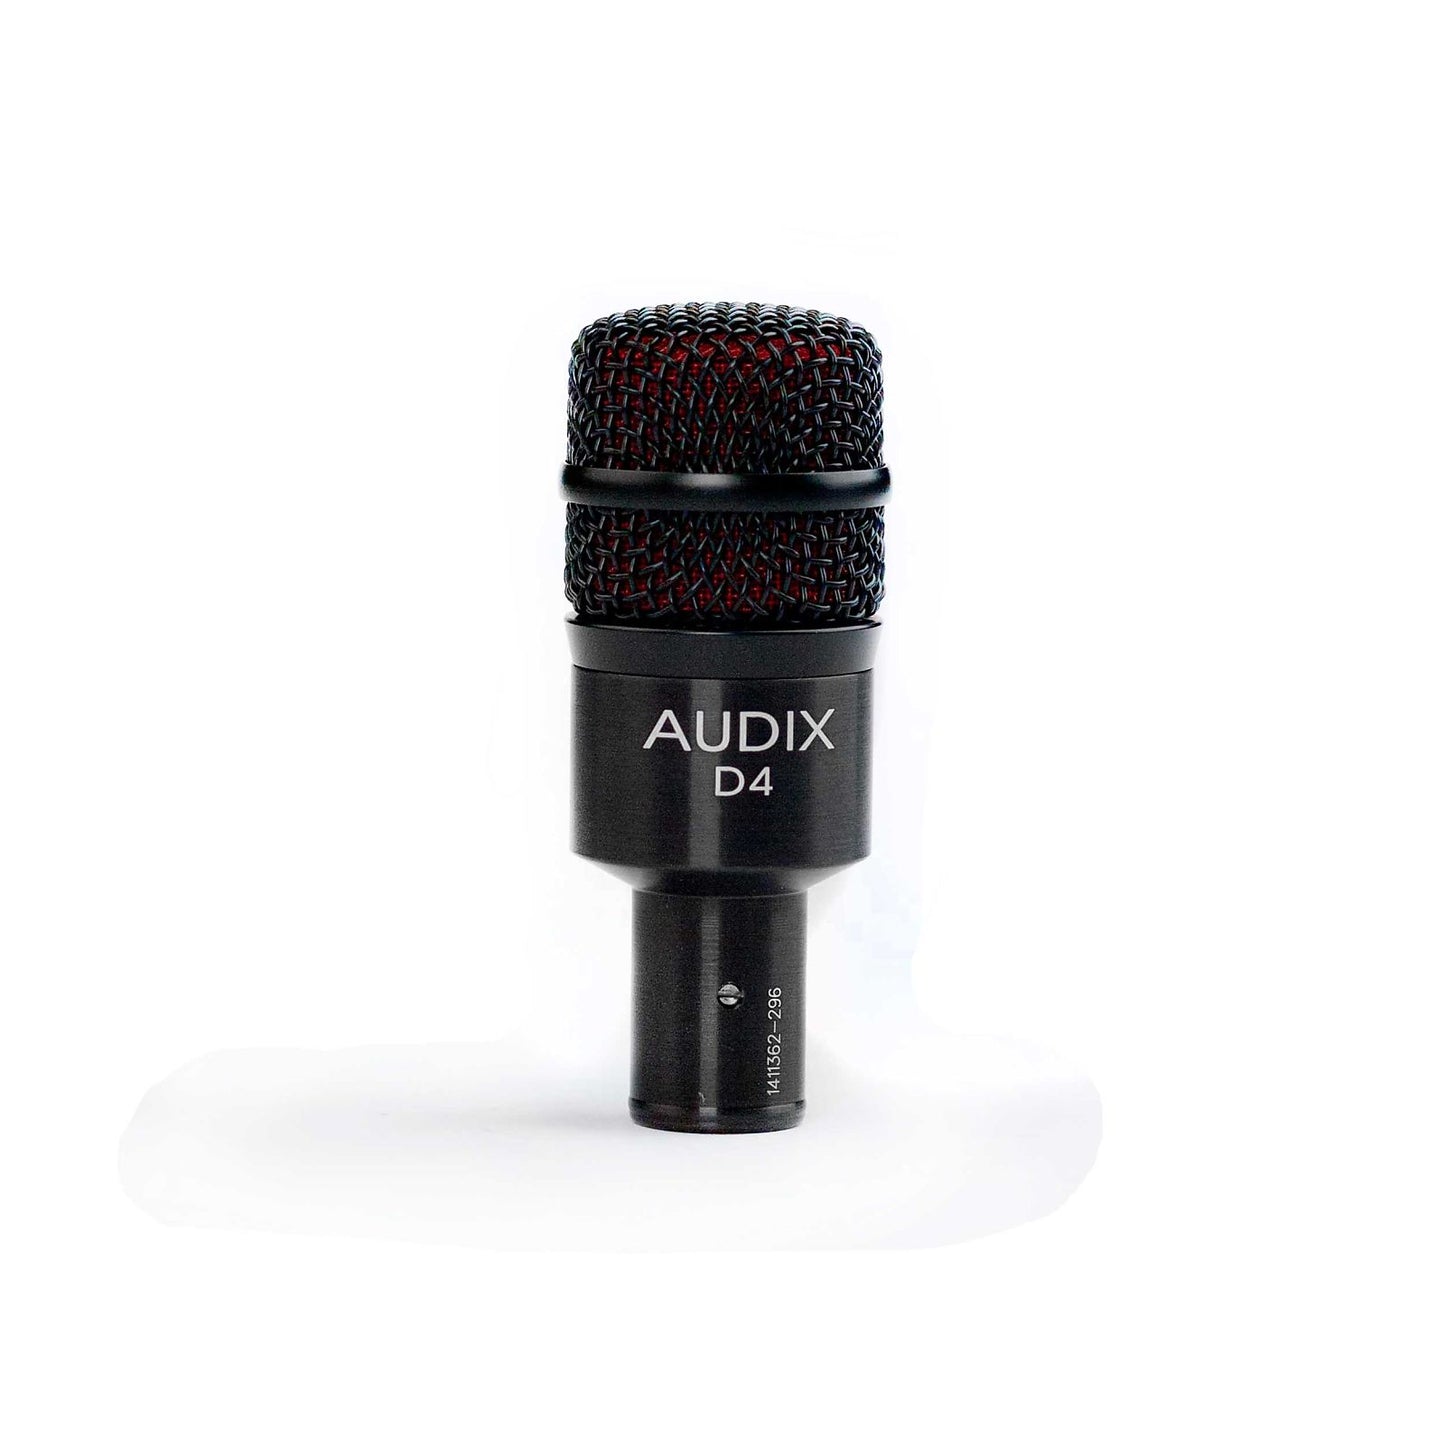 Audix D4 Full Range Instrument Microphone